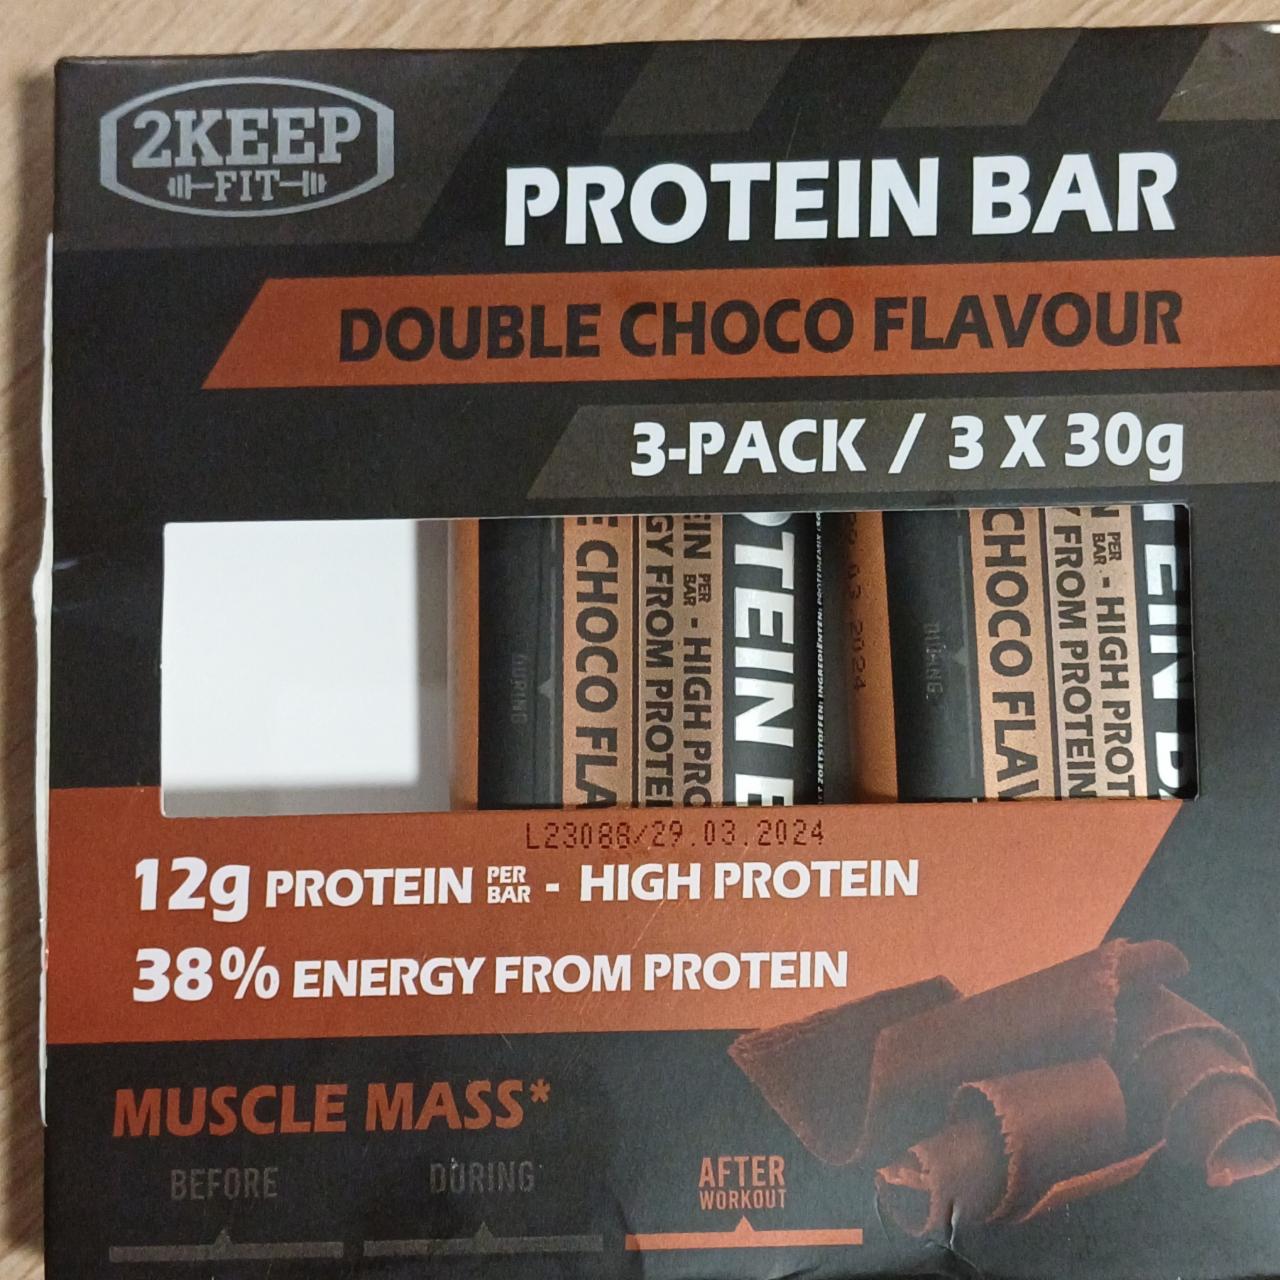 Zdjęcia - protein bar double choco flavour 38% protein 2Keep Fit